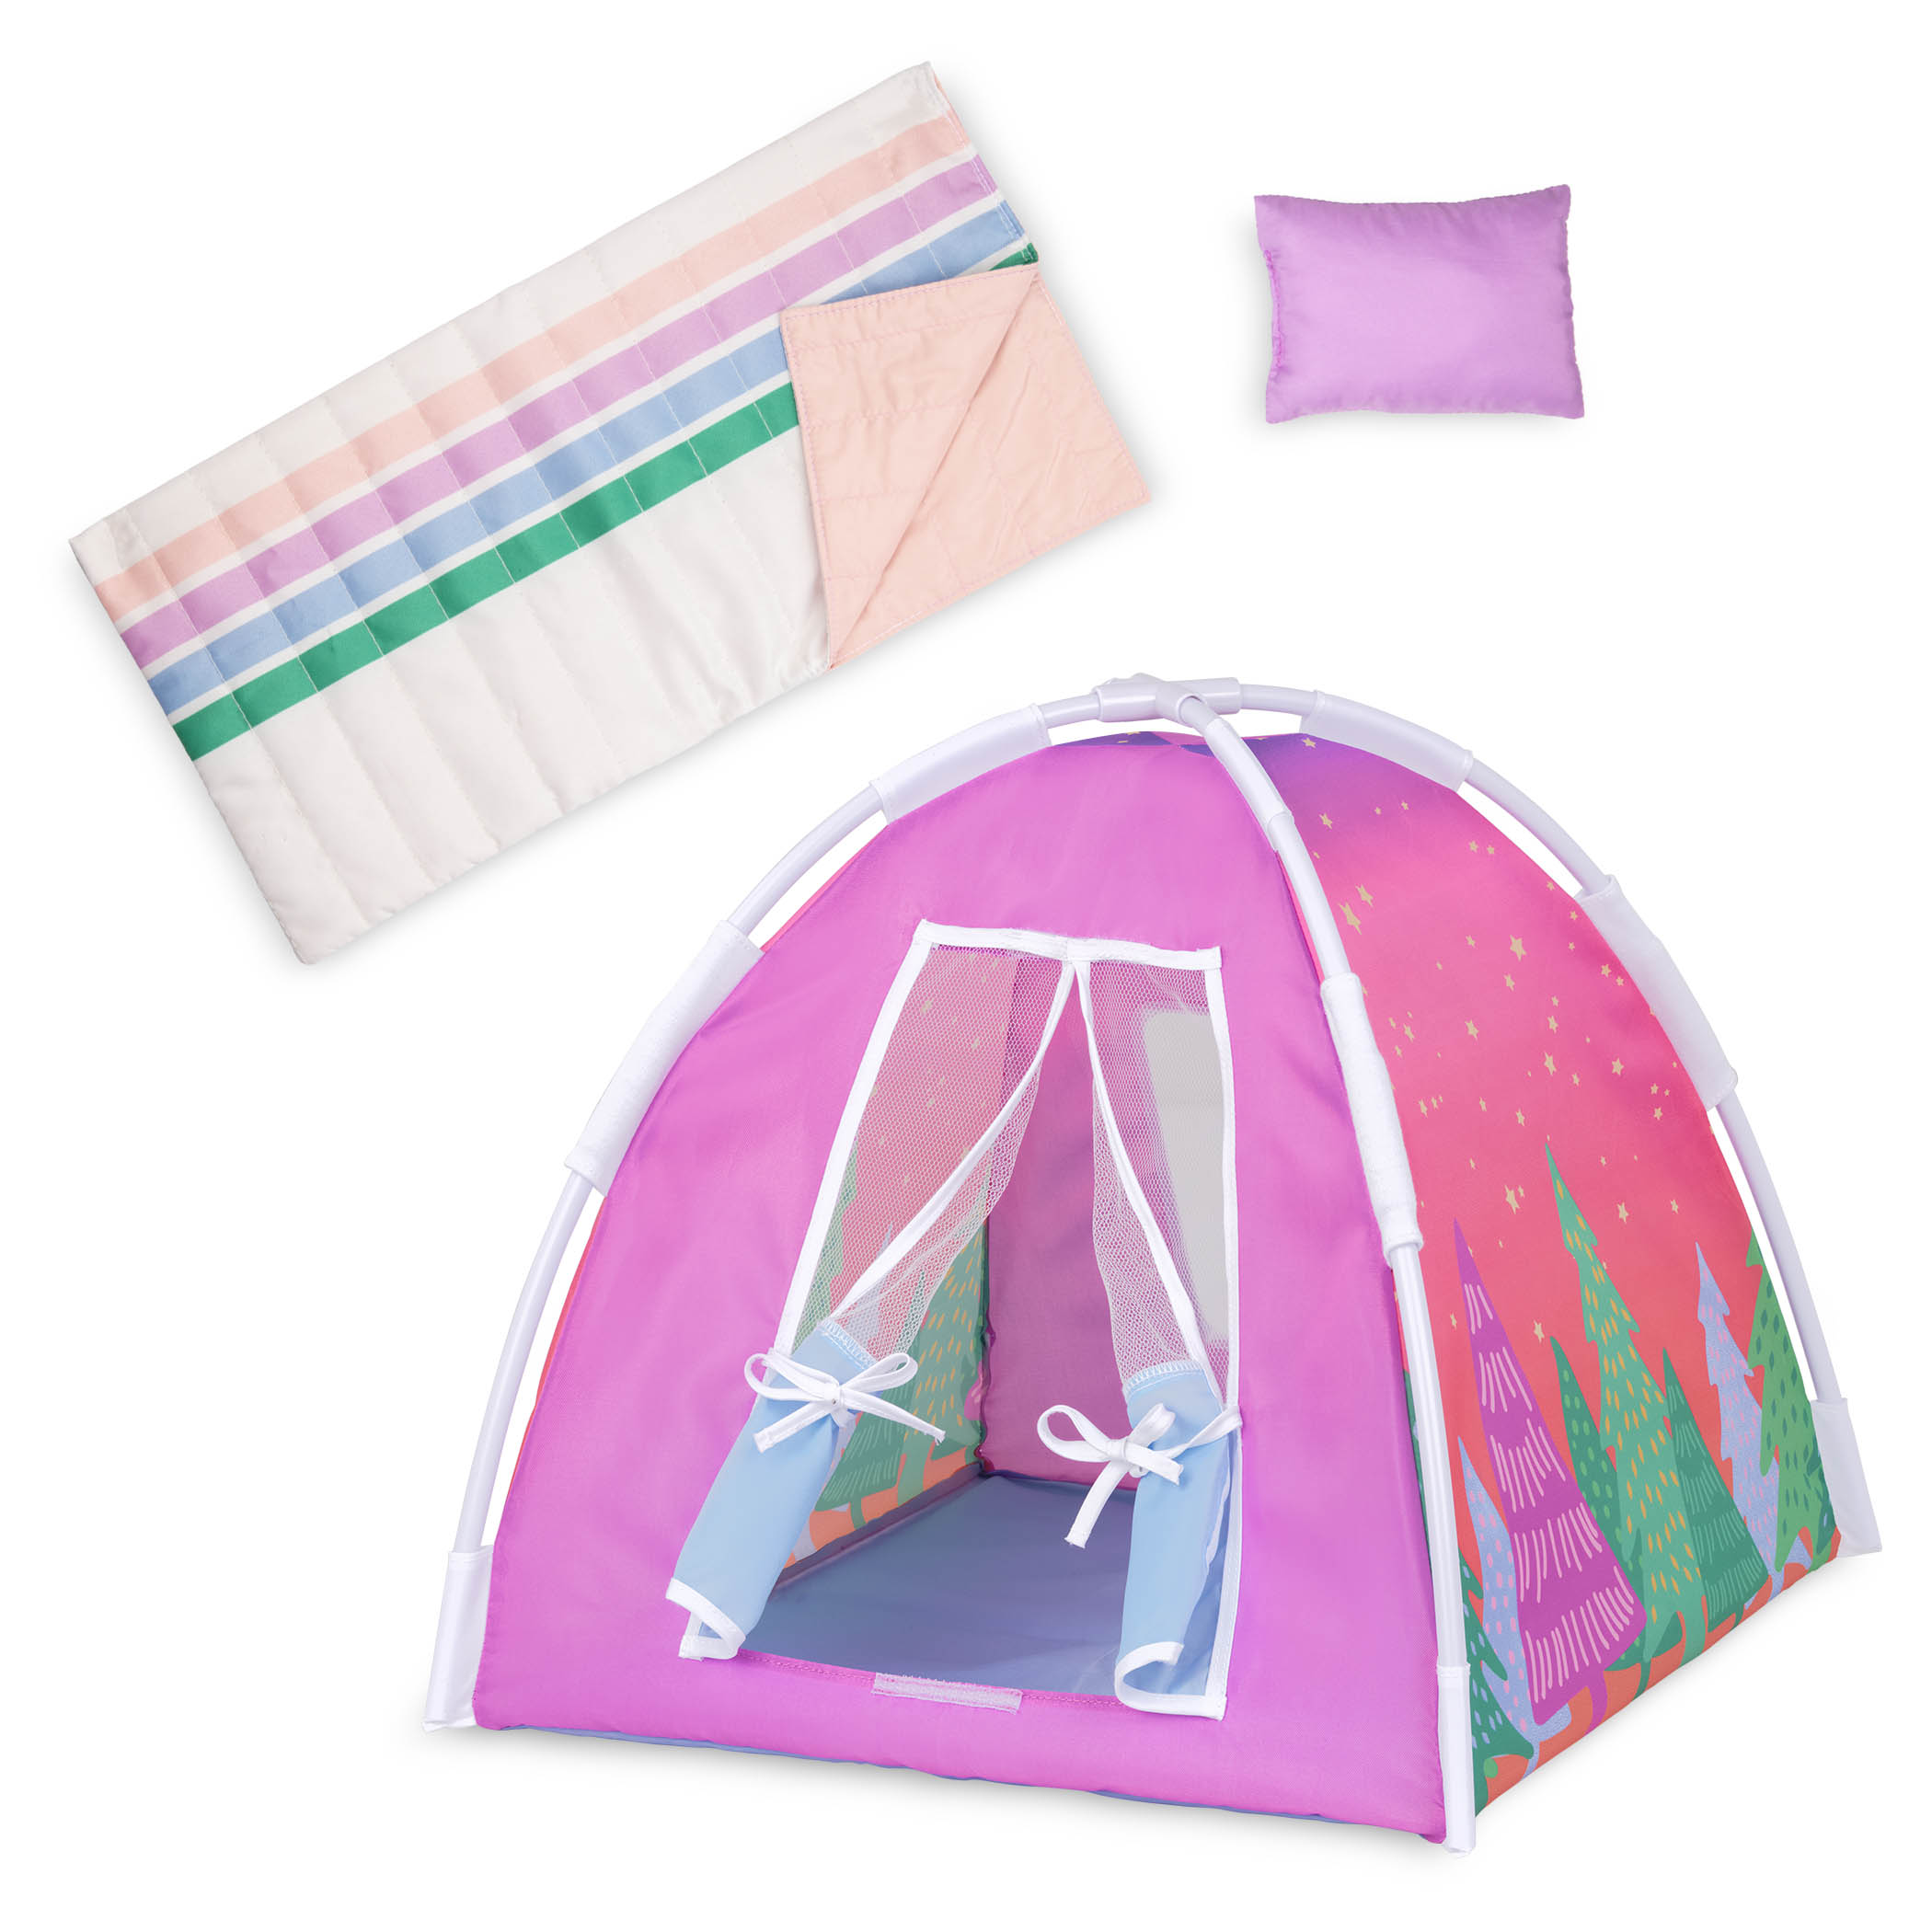 https://myglittergirls.com/wp-content/uploads/GG57155_Glitter-Girls-Camping-Tent-Set-for-14-inch-dolls-MAIN.jpg